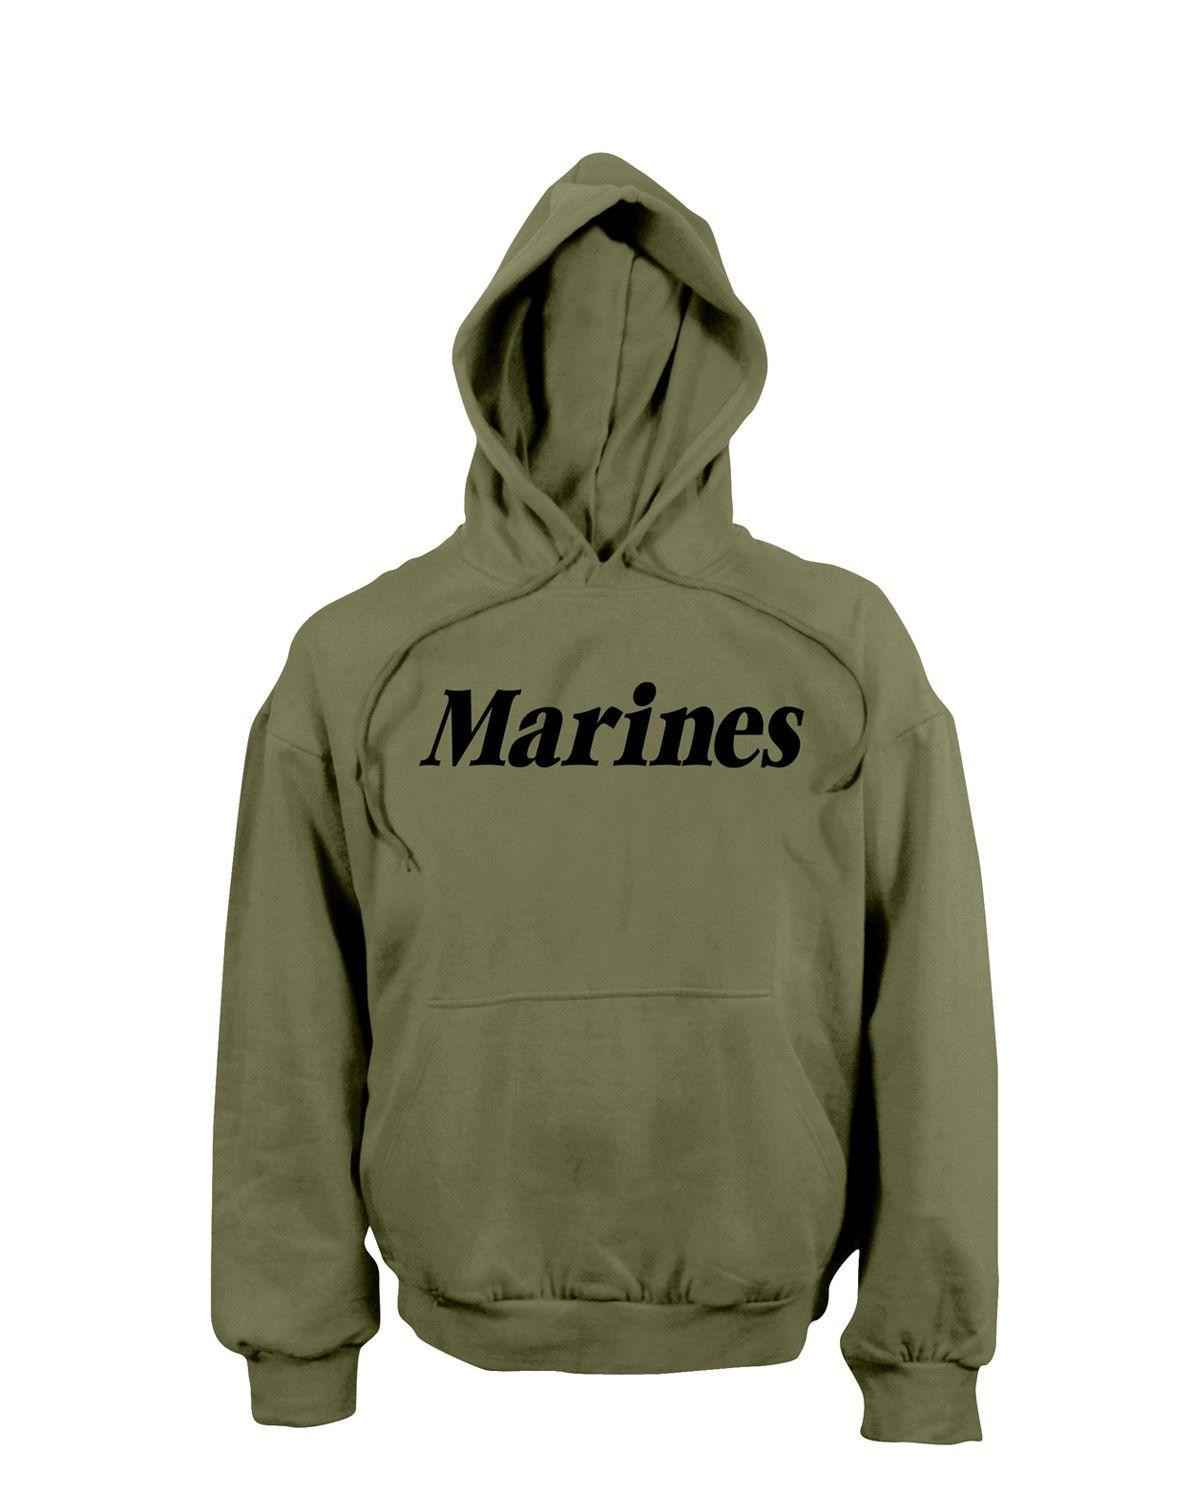 10: Rothco Trænings Sweatshirt (Oliven m. Marines, S)